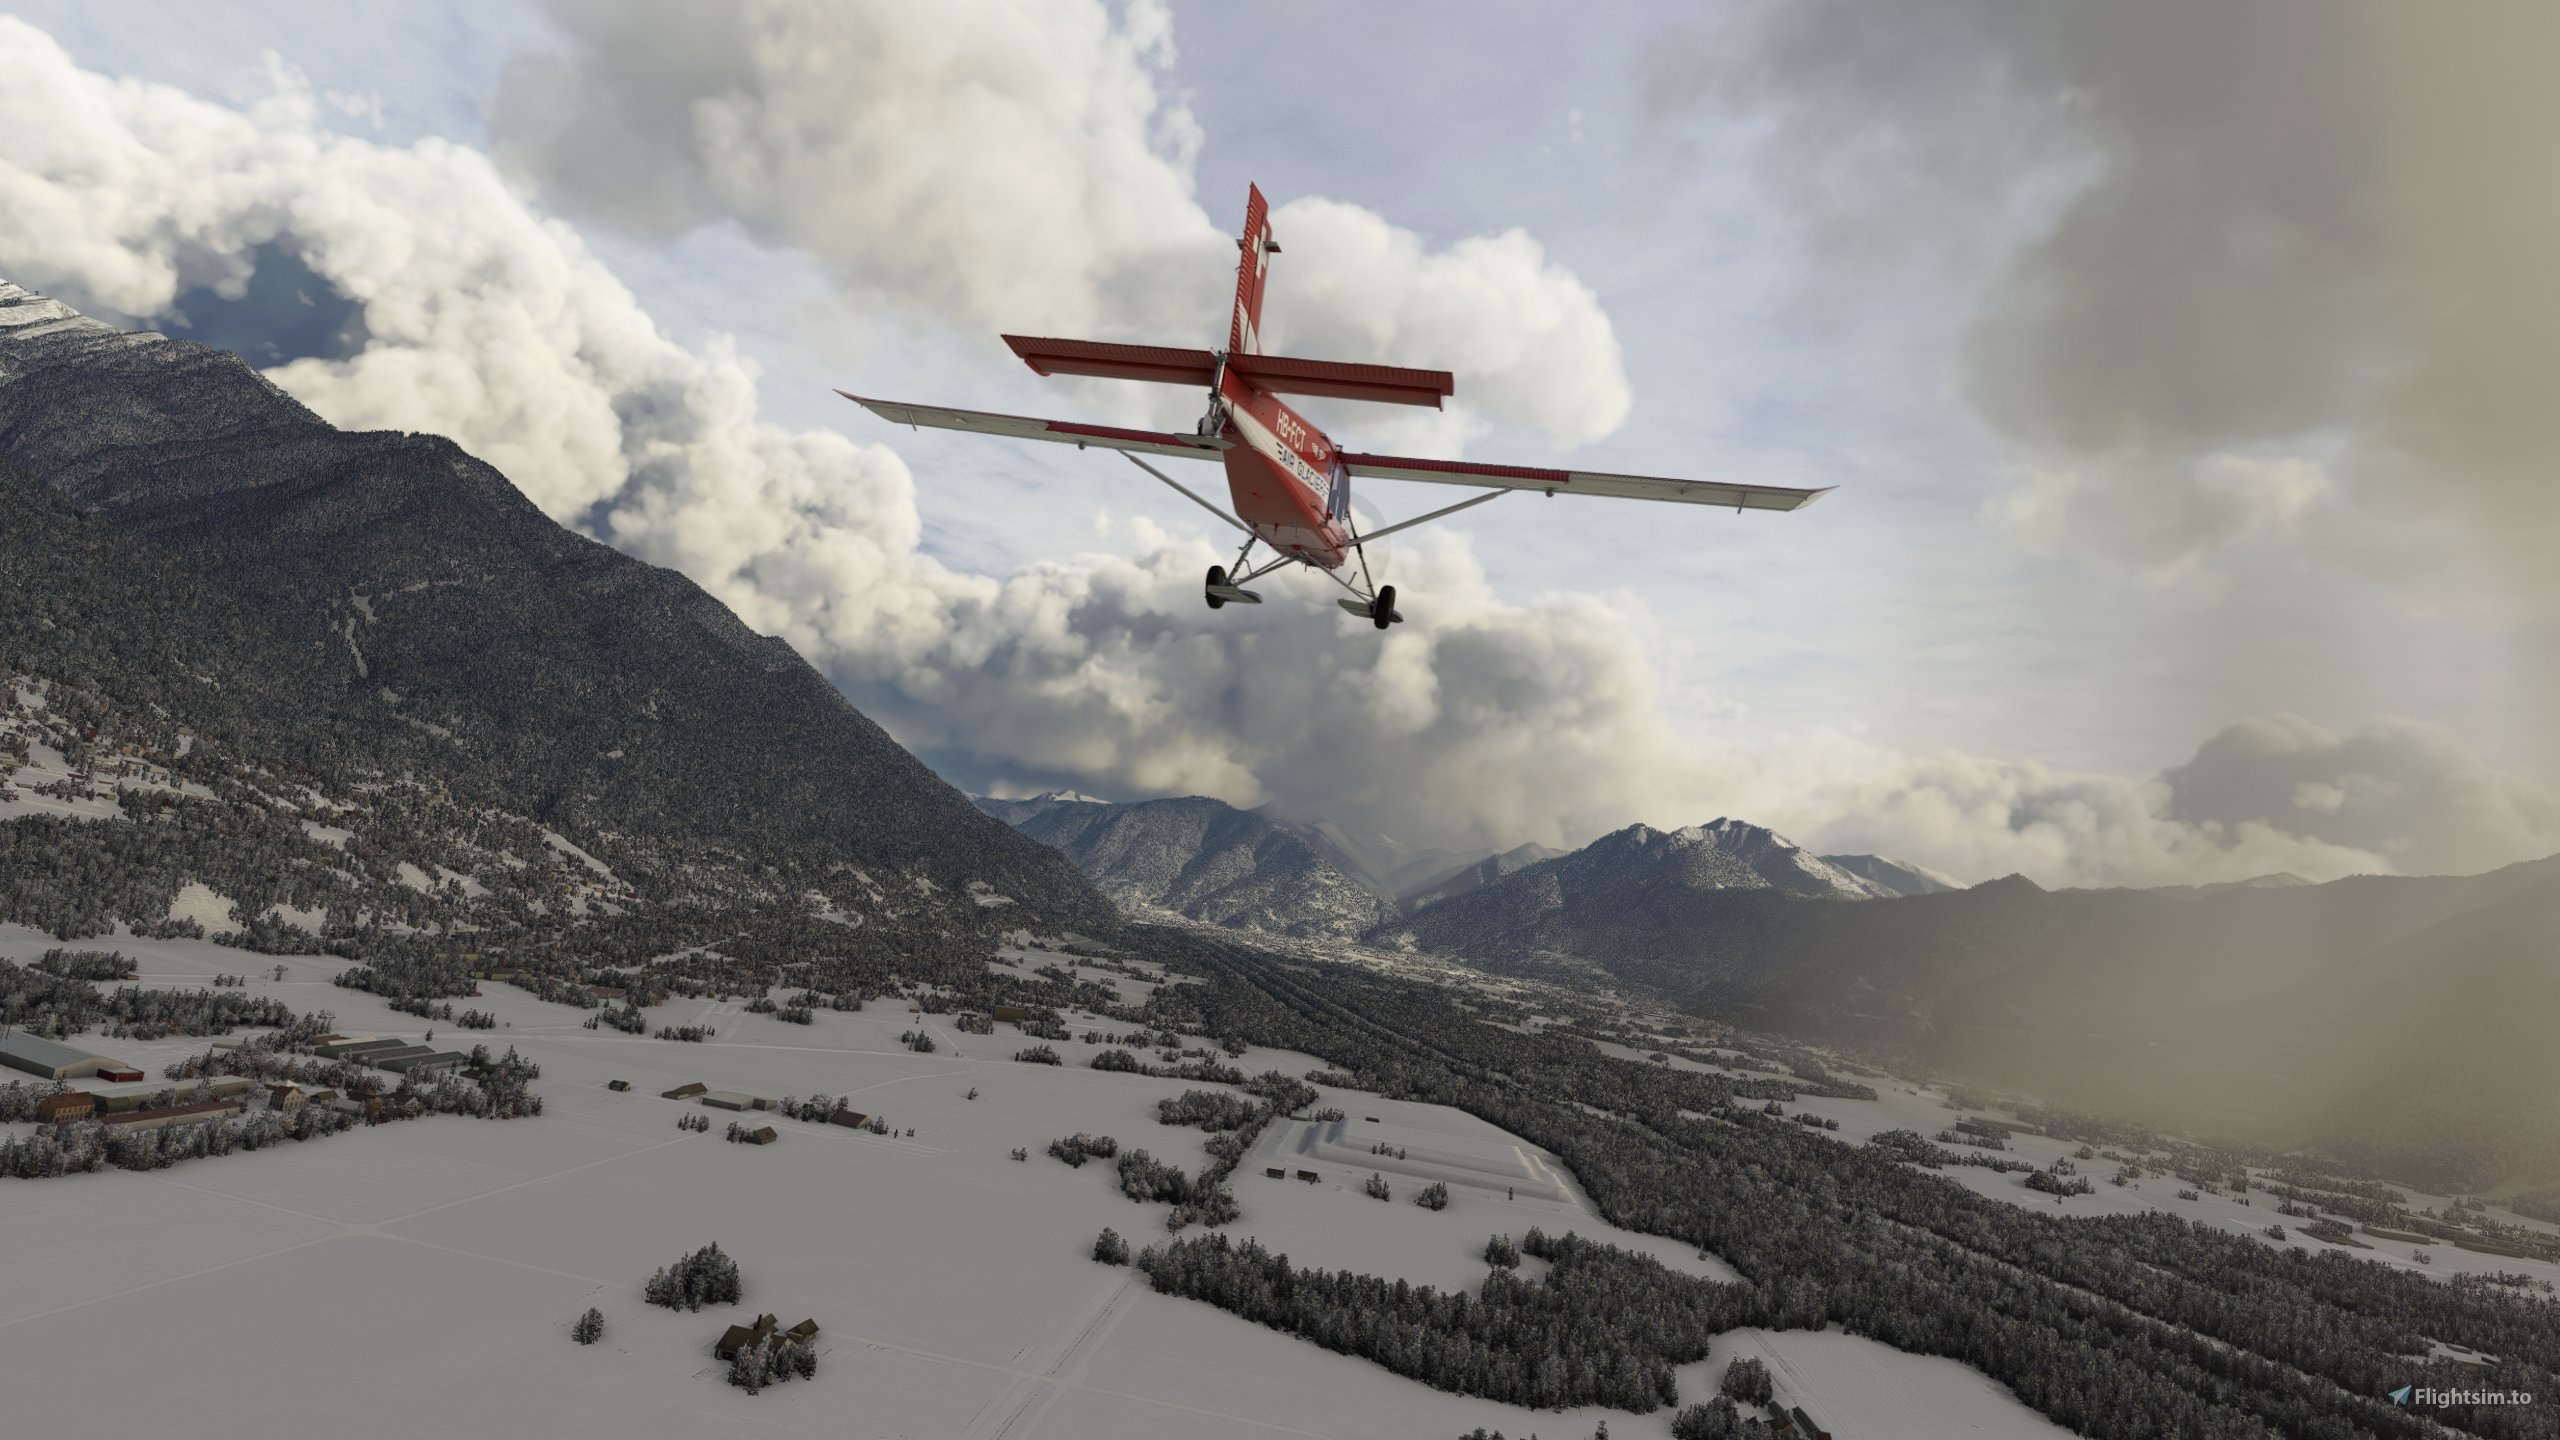 Microsoft Flight Simulator modders are replacing Bing with Google